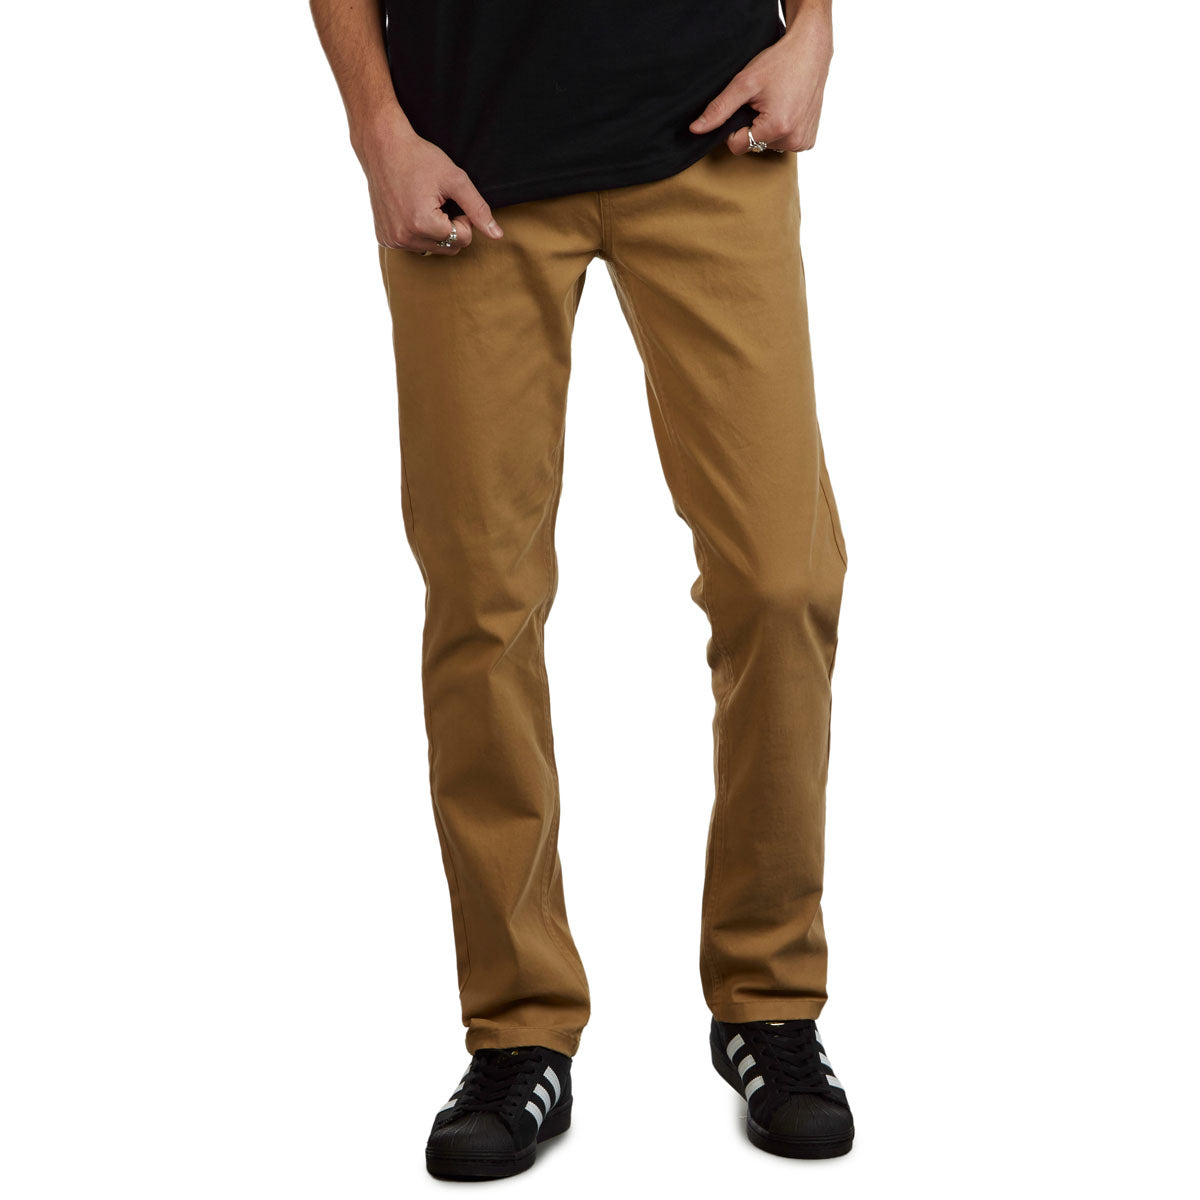 CCS Standard Plus Slim Chino Pants - Khaki image 1